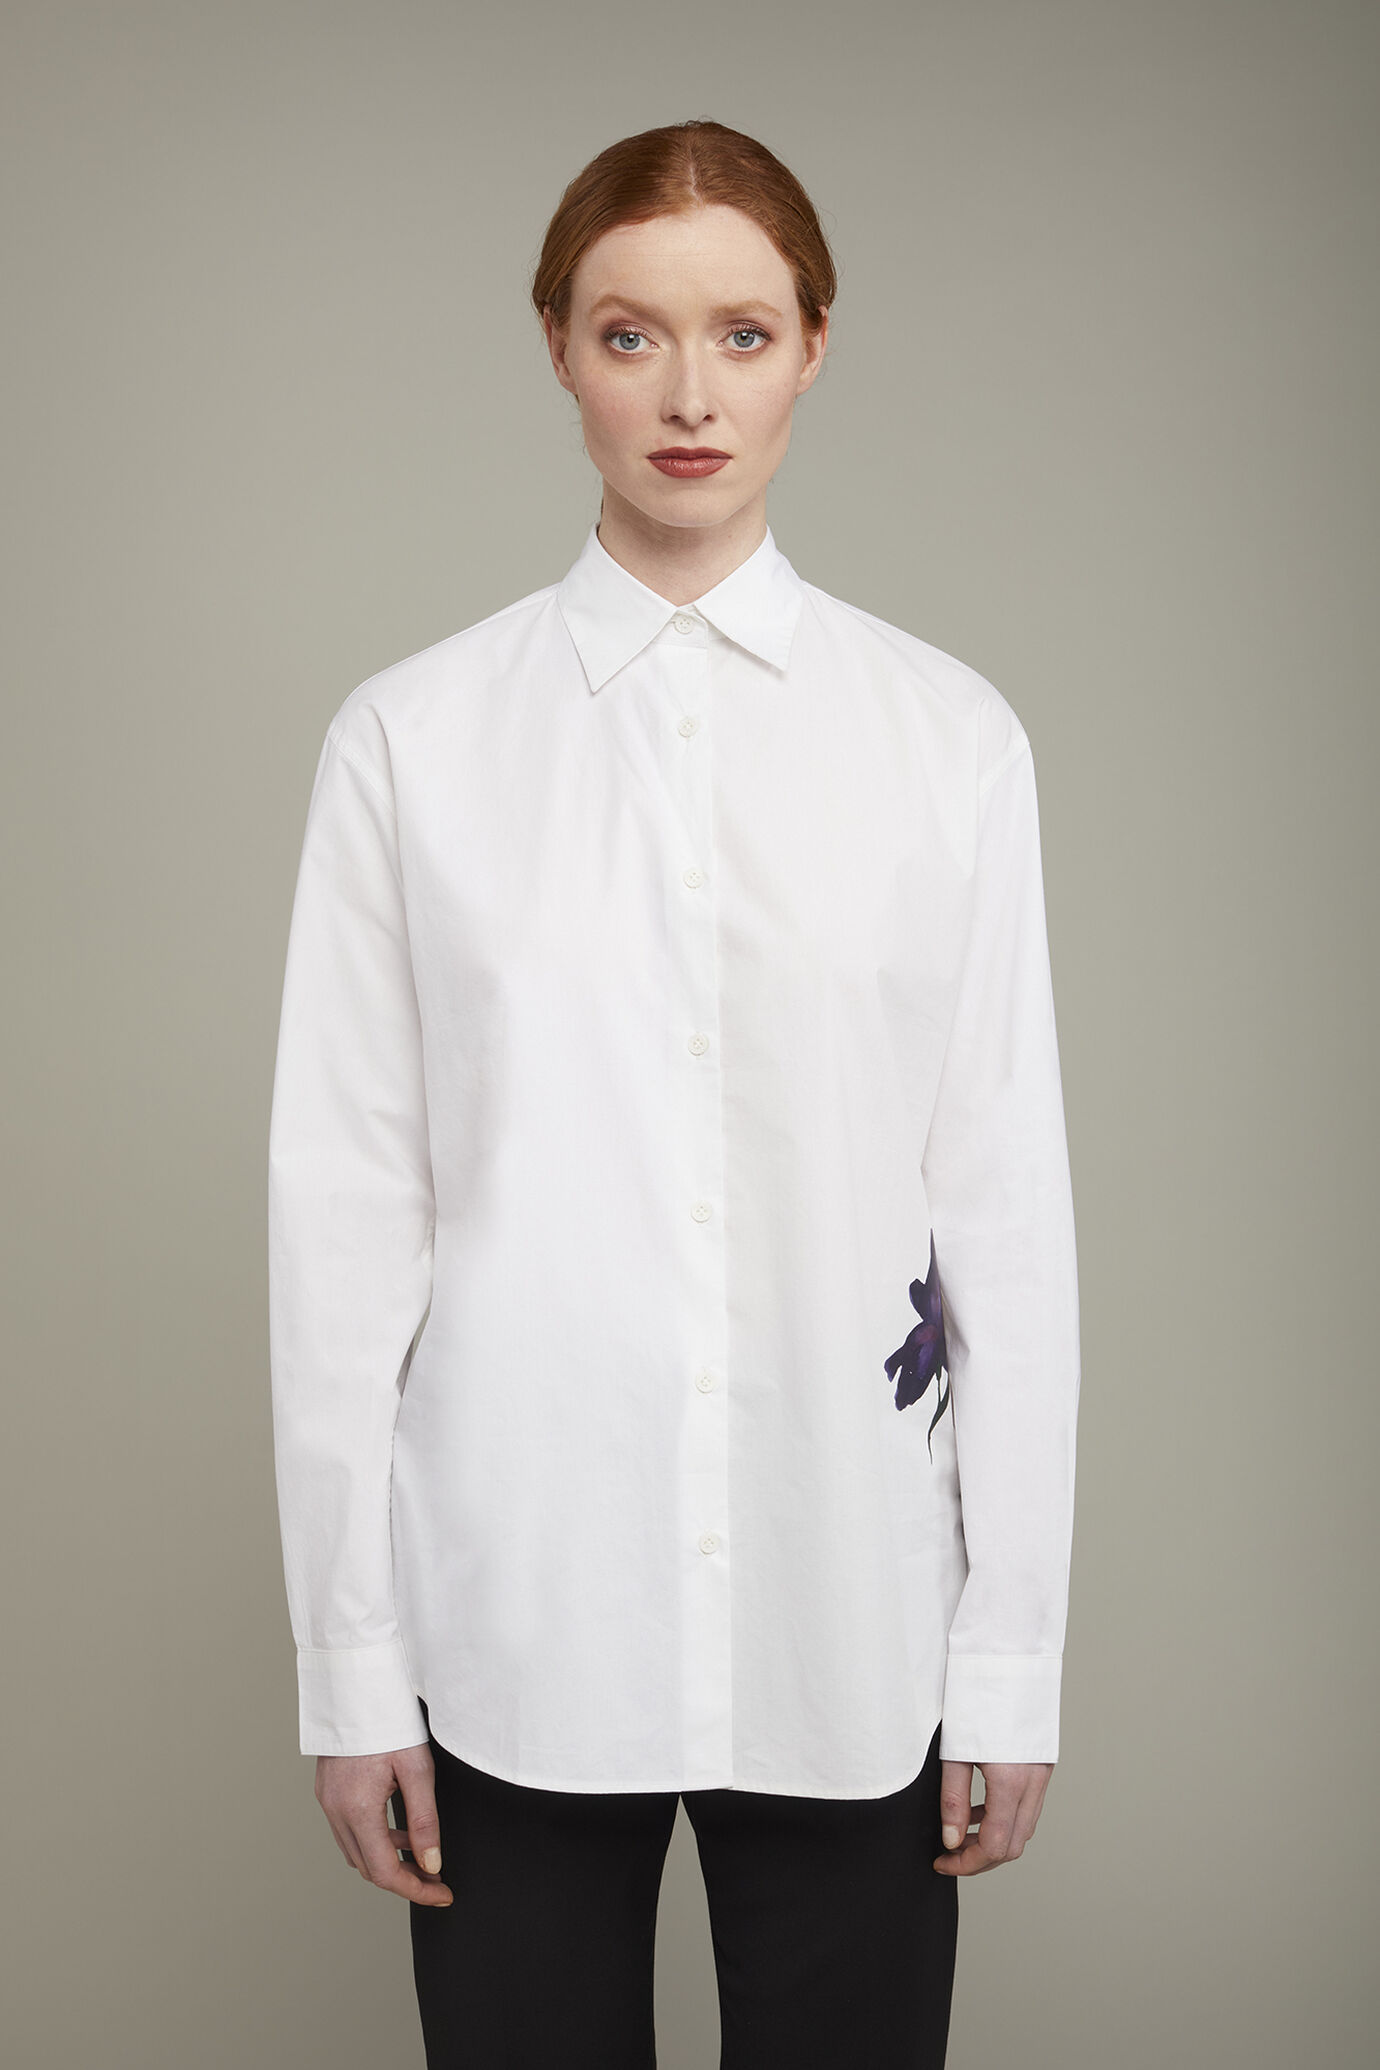 Women’s shirt floral design 100% cotton oversize